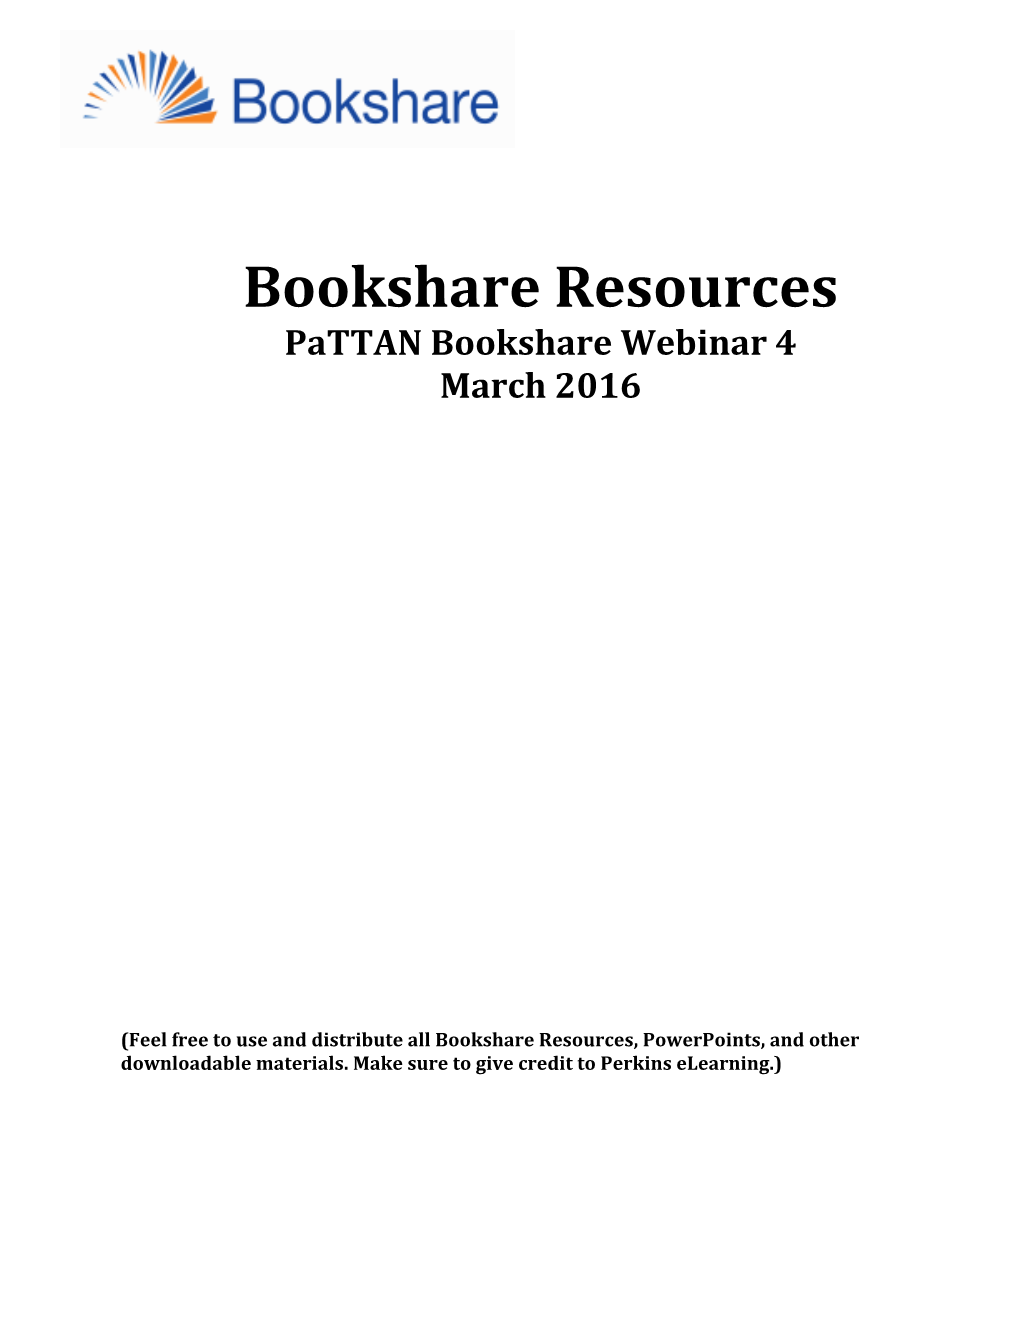 Bookshare Resources Pattan Bookshare Webinar 4 March 2016